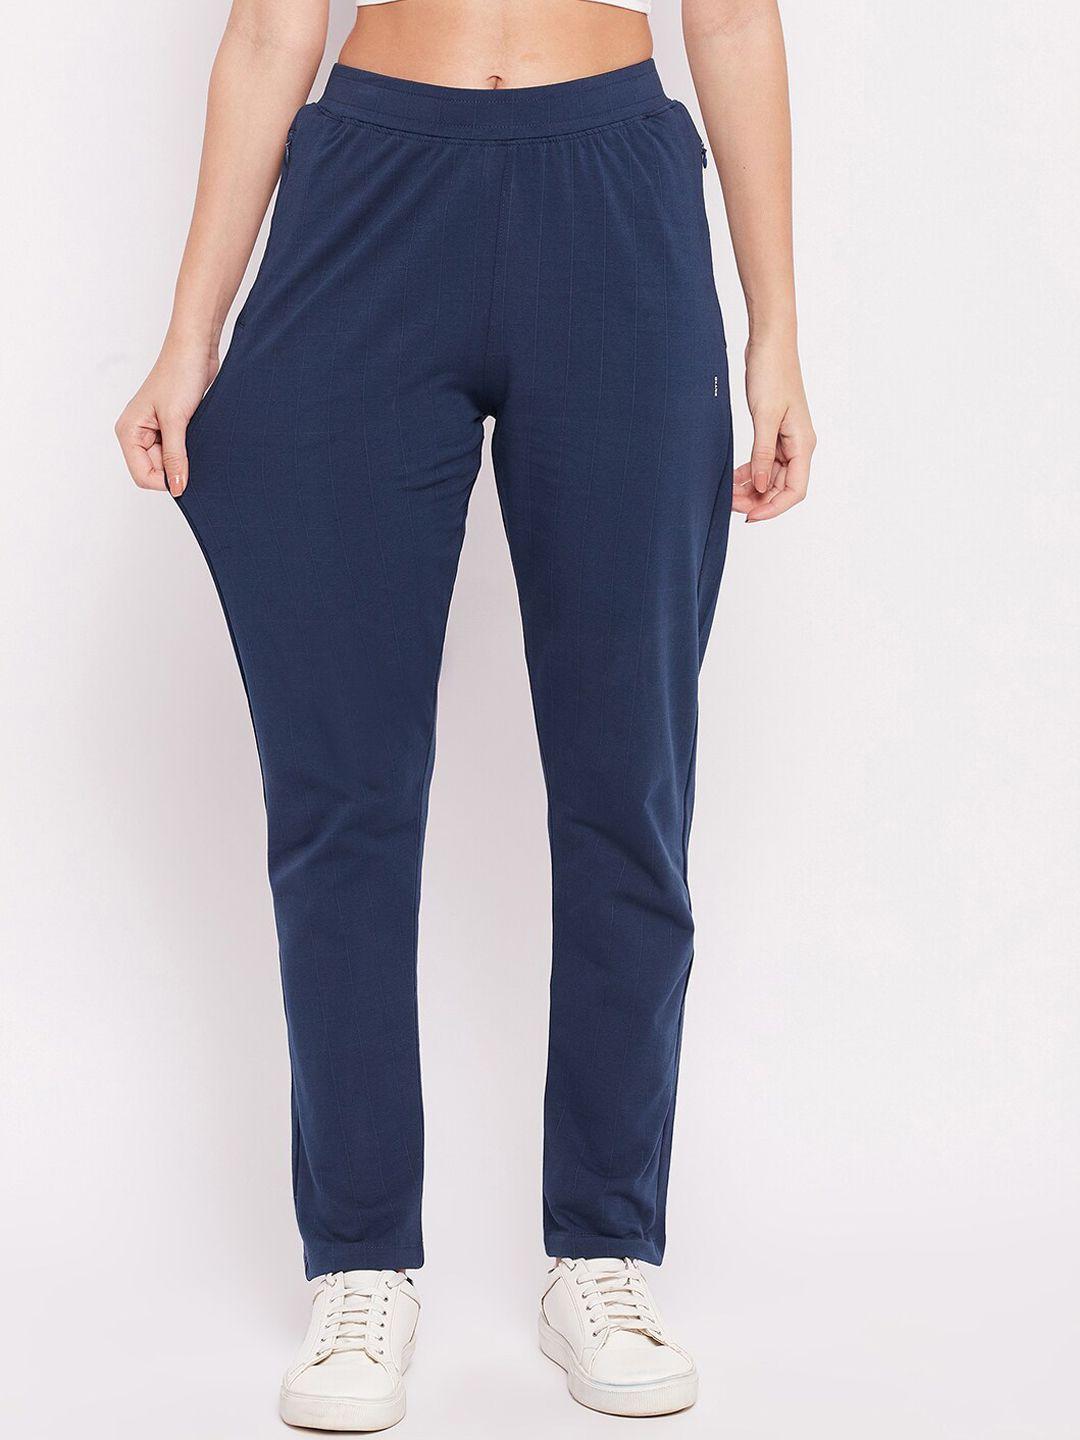 okane-women-navy-blue-solid-track-pants